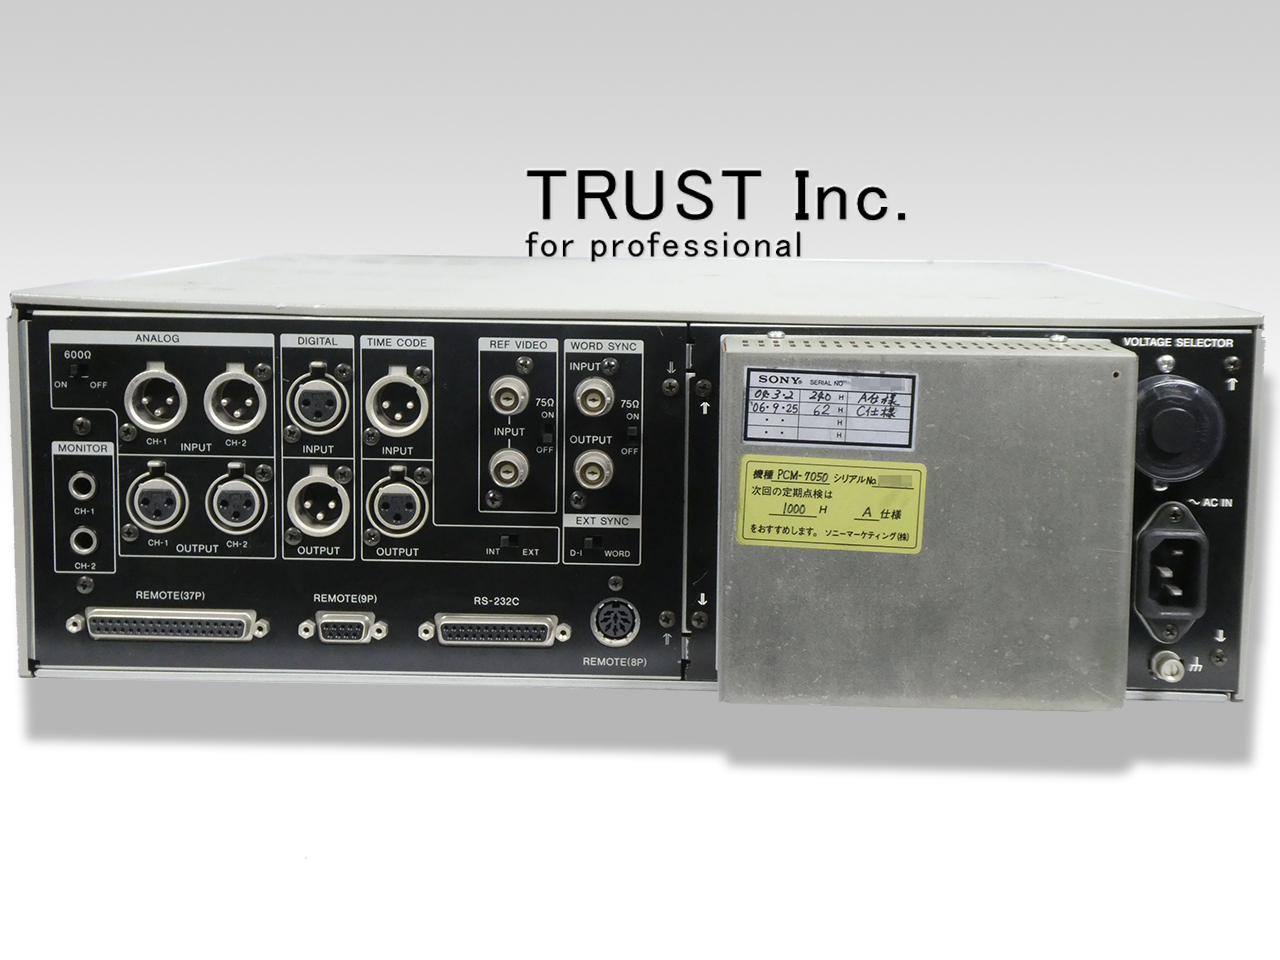 PCM-7050 / DAT Recorder【中古放送用・業務用 映像機器・音響機器の店 